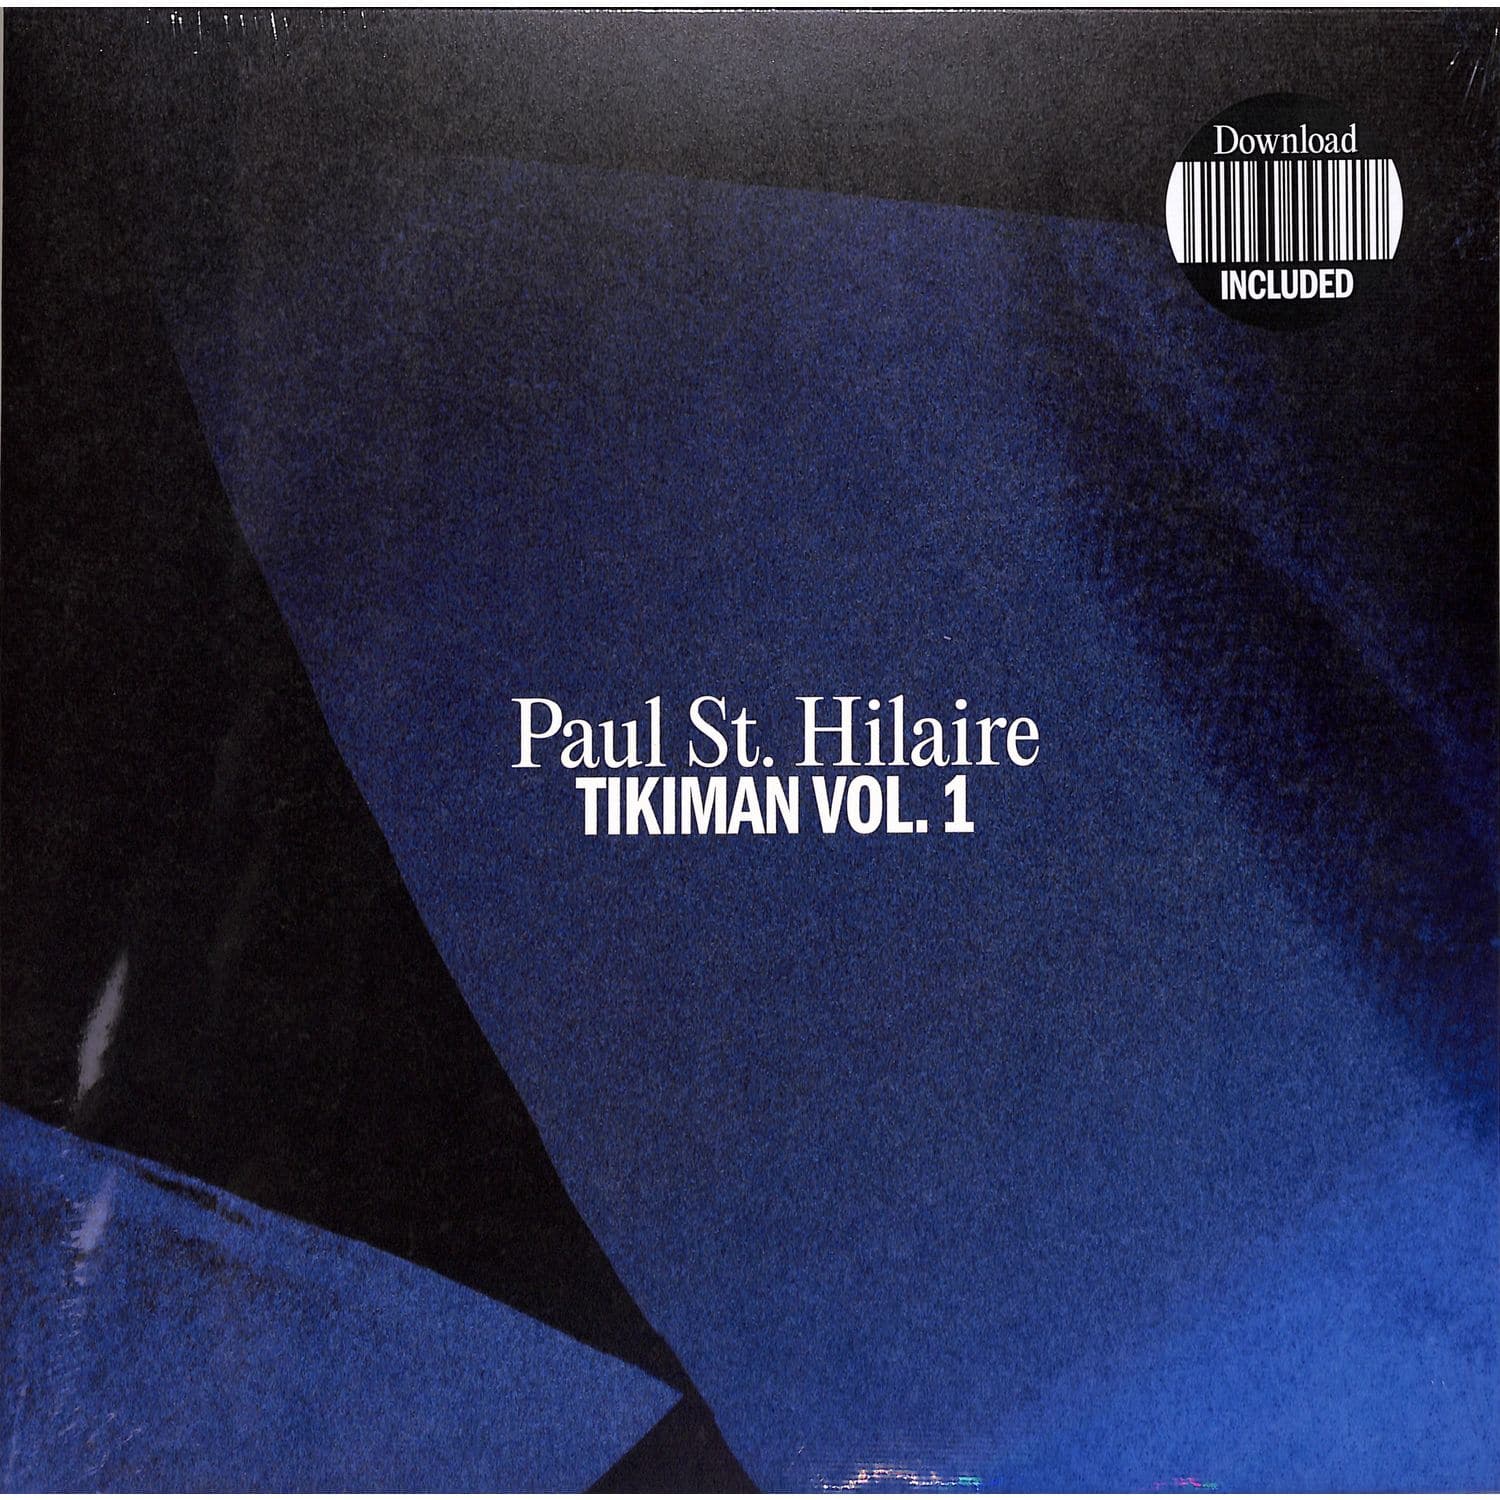 Paul St. Hilaire - TIKIMAN VOL. 1 